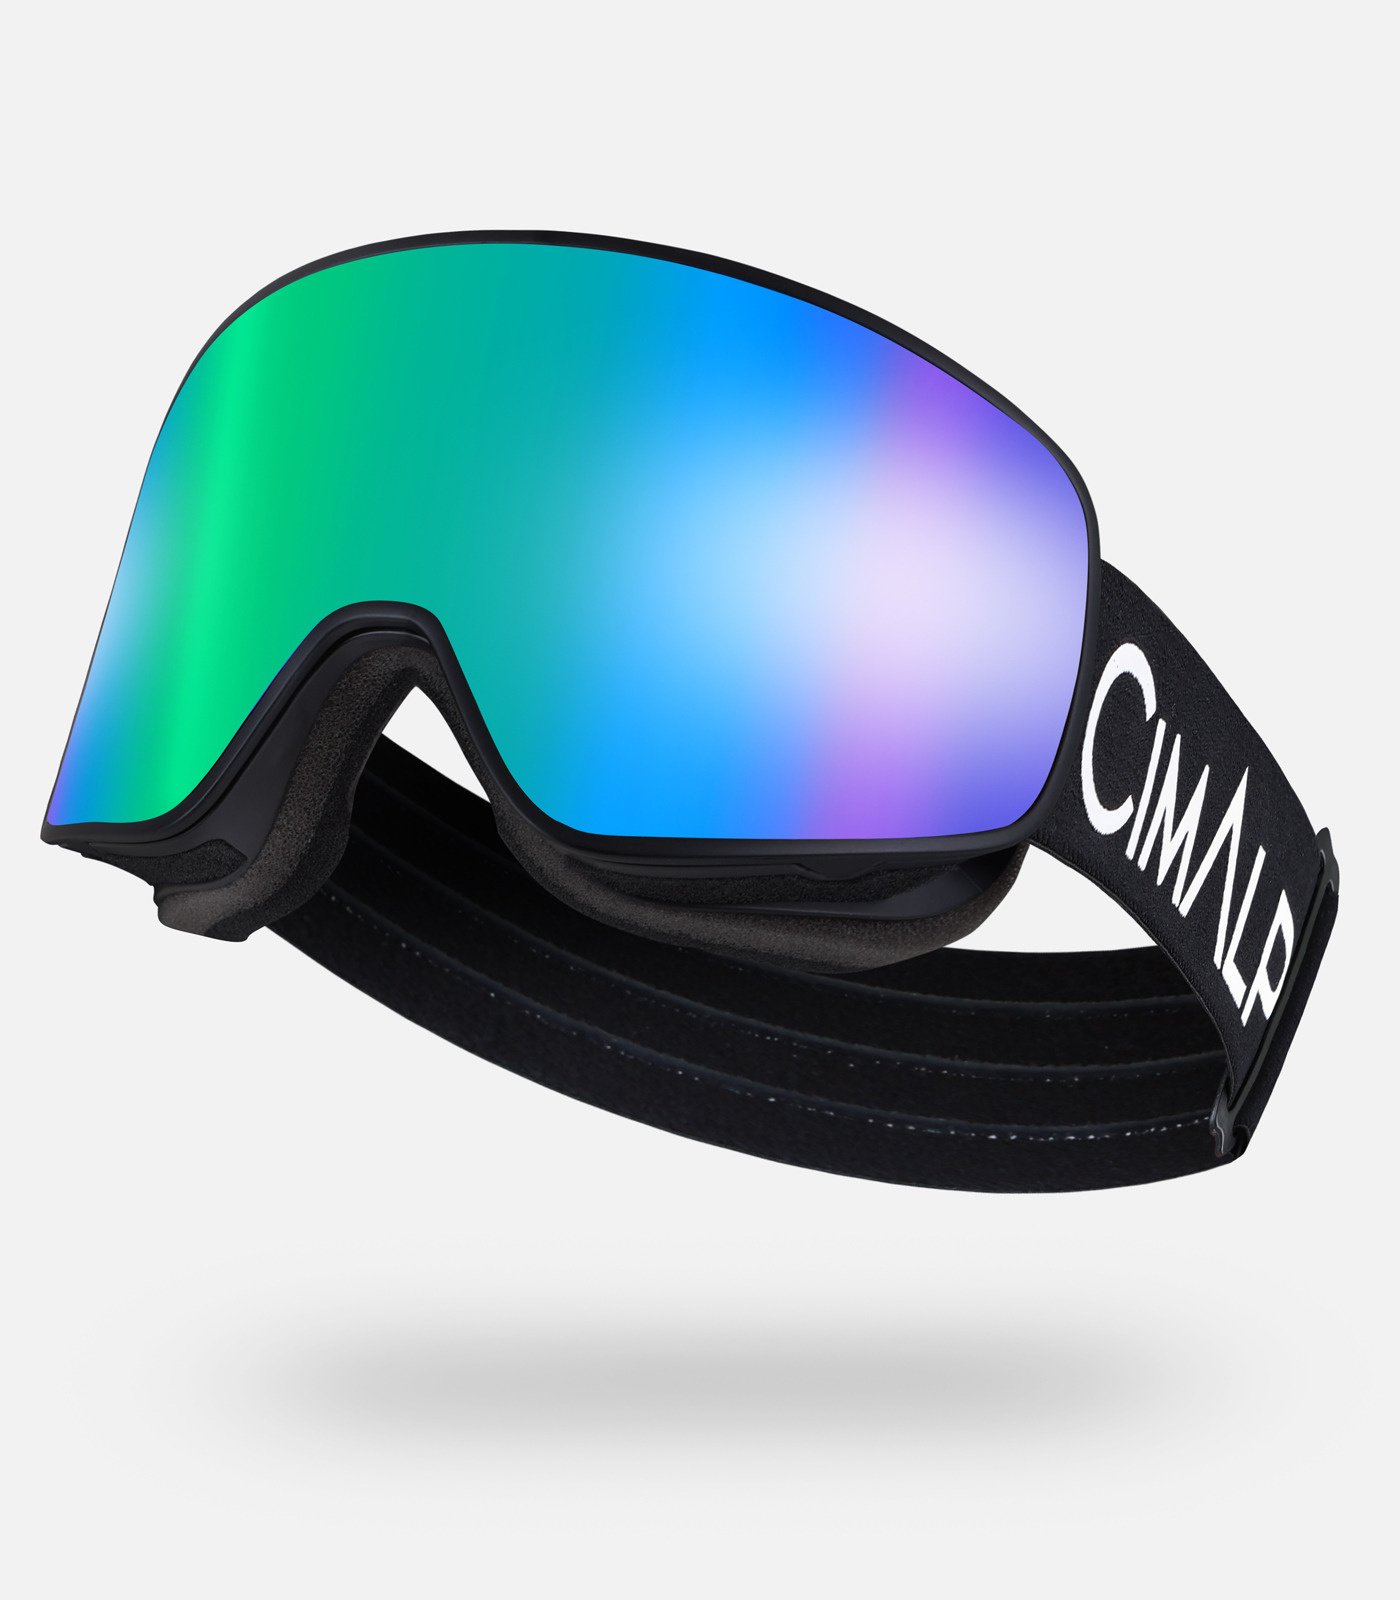 Gafas de esquí categoría 3 | Cimalp